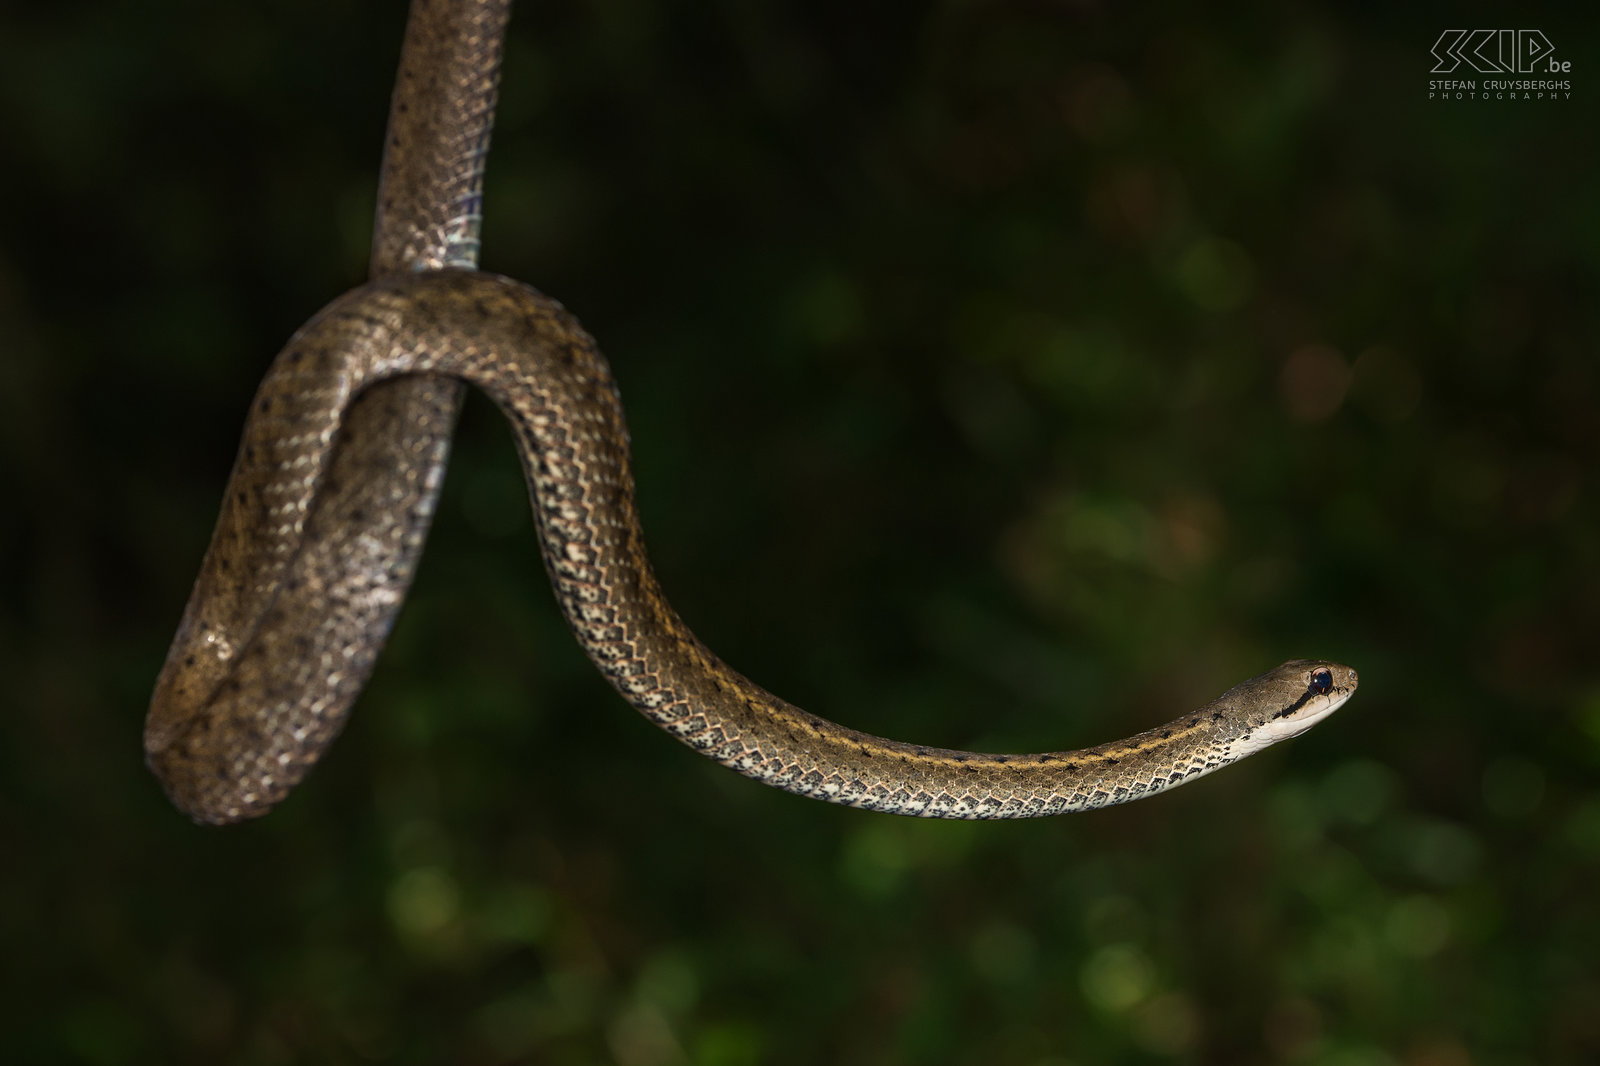 Ranomafana - Grandidier's water snake We also encountered some harmless Grandidier's water snakes (Liopholidophis grandidieri). Stefan Cruysberghs